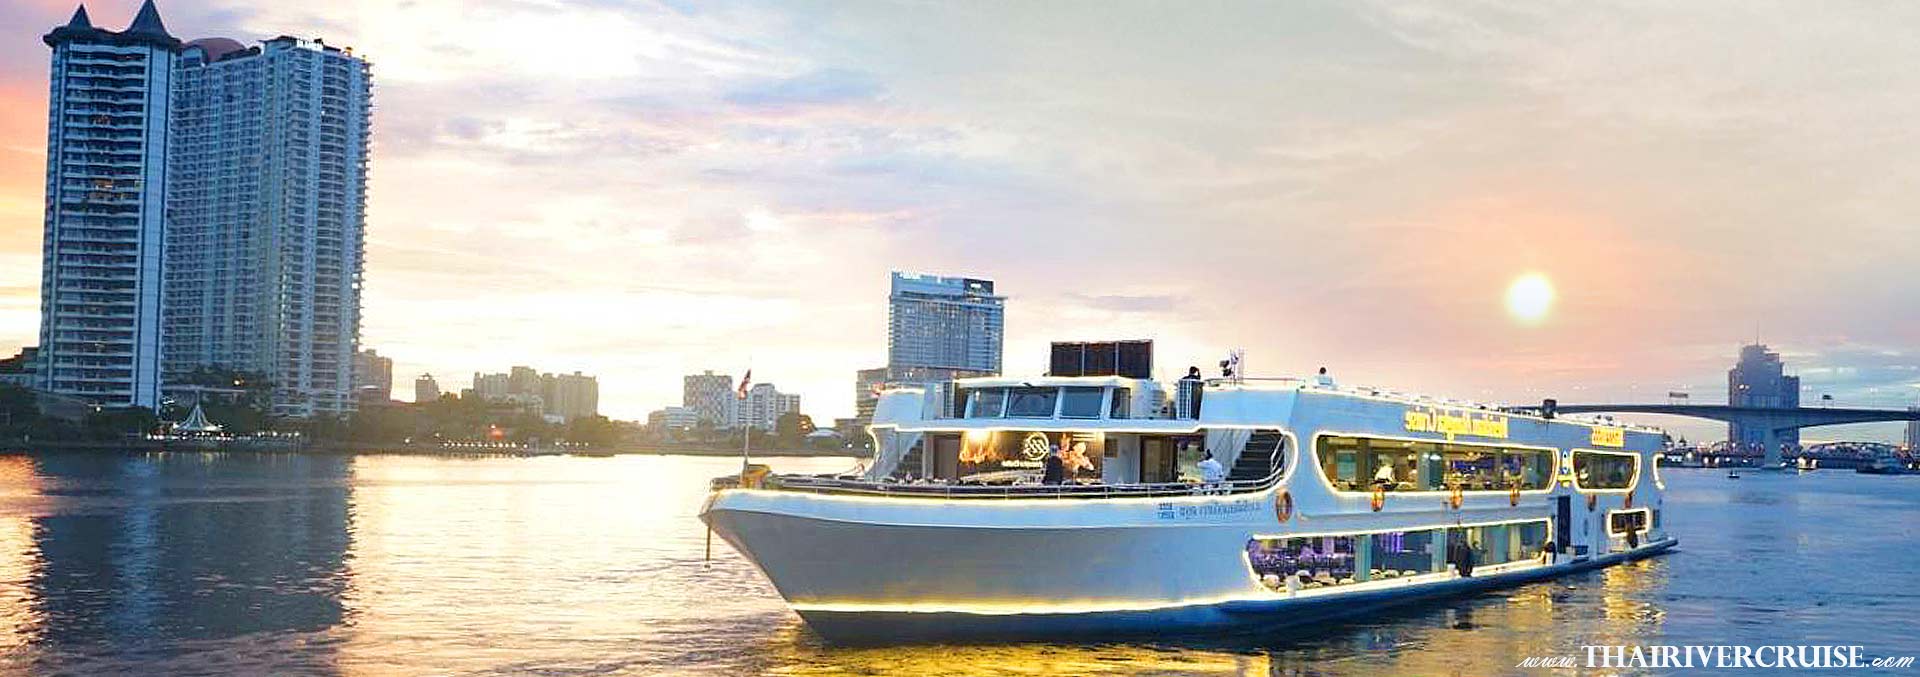 Twilight Cruise Bangkok Chao Phraya River Bangkok,Thailand  White Orchid River Cruise Bangkok 